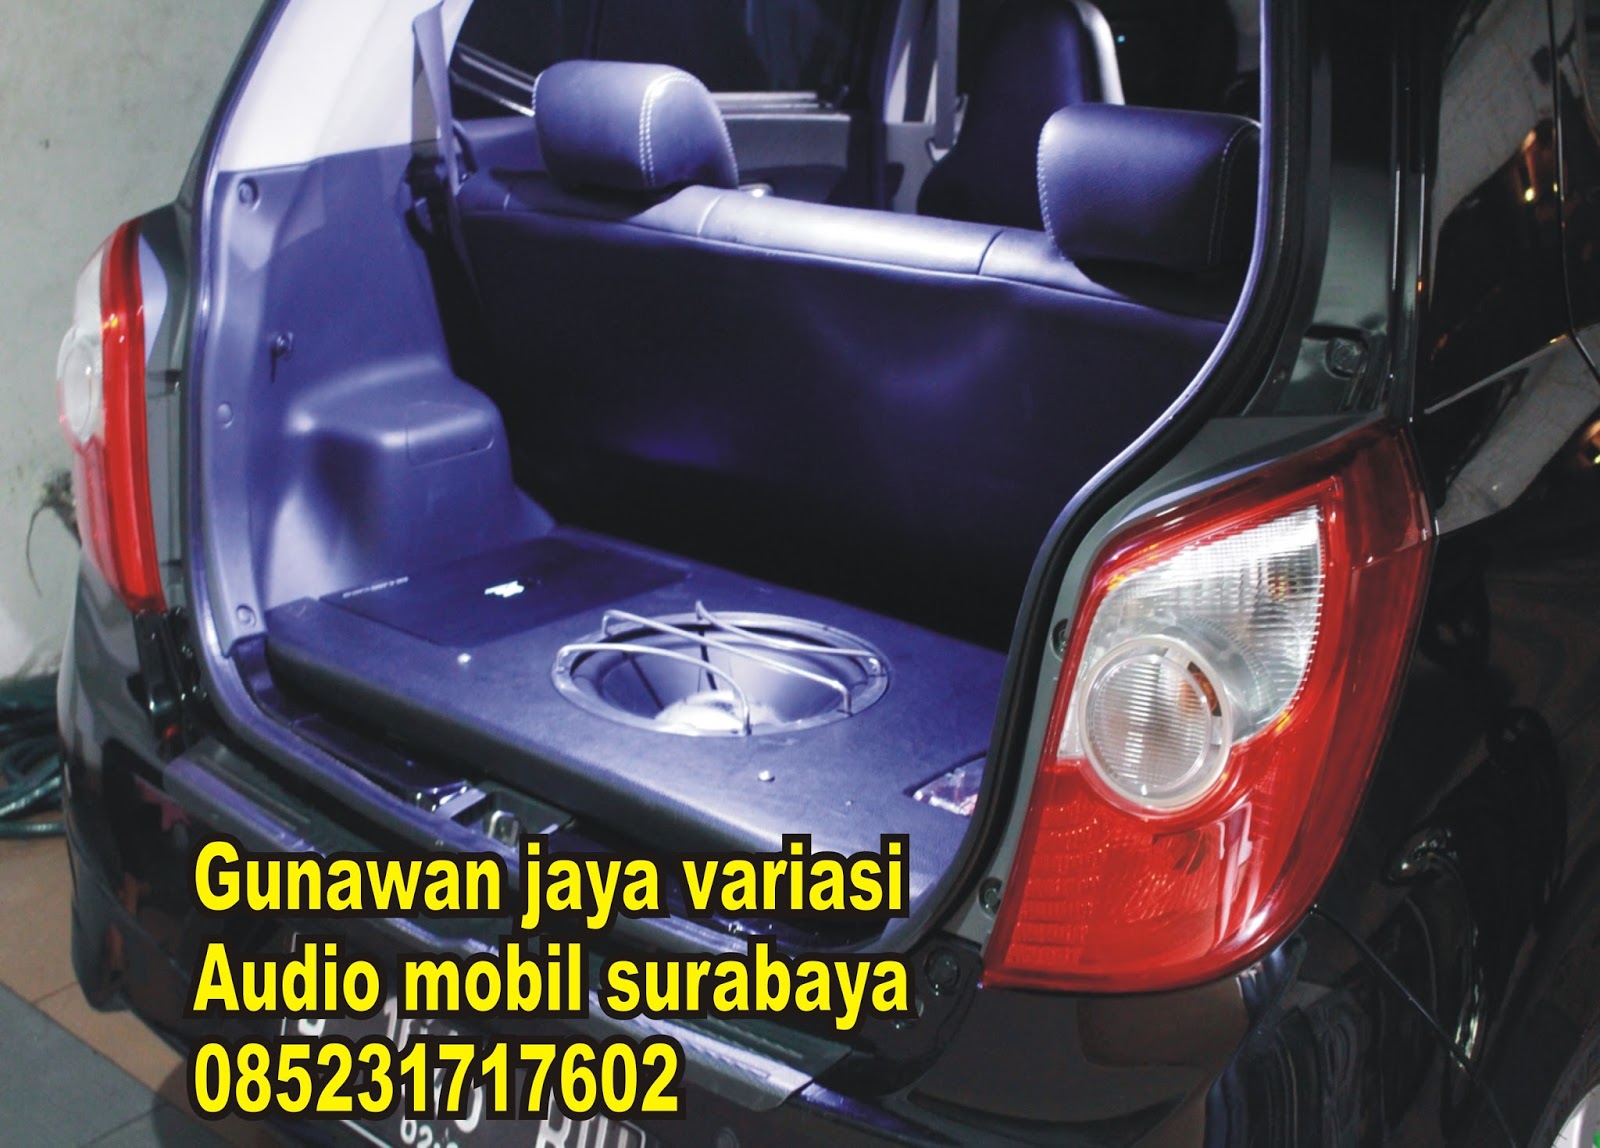 Audio Mobil Surabaya Audio Mobil Agya 085231717602